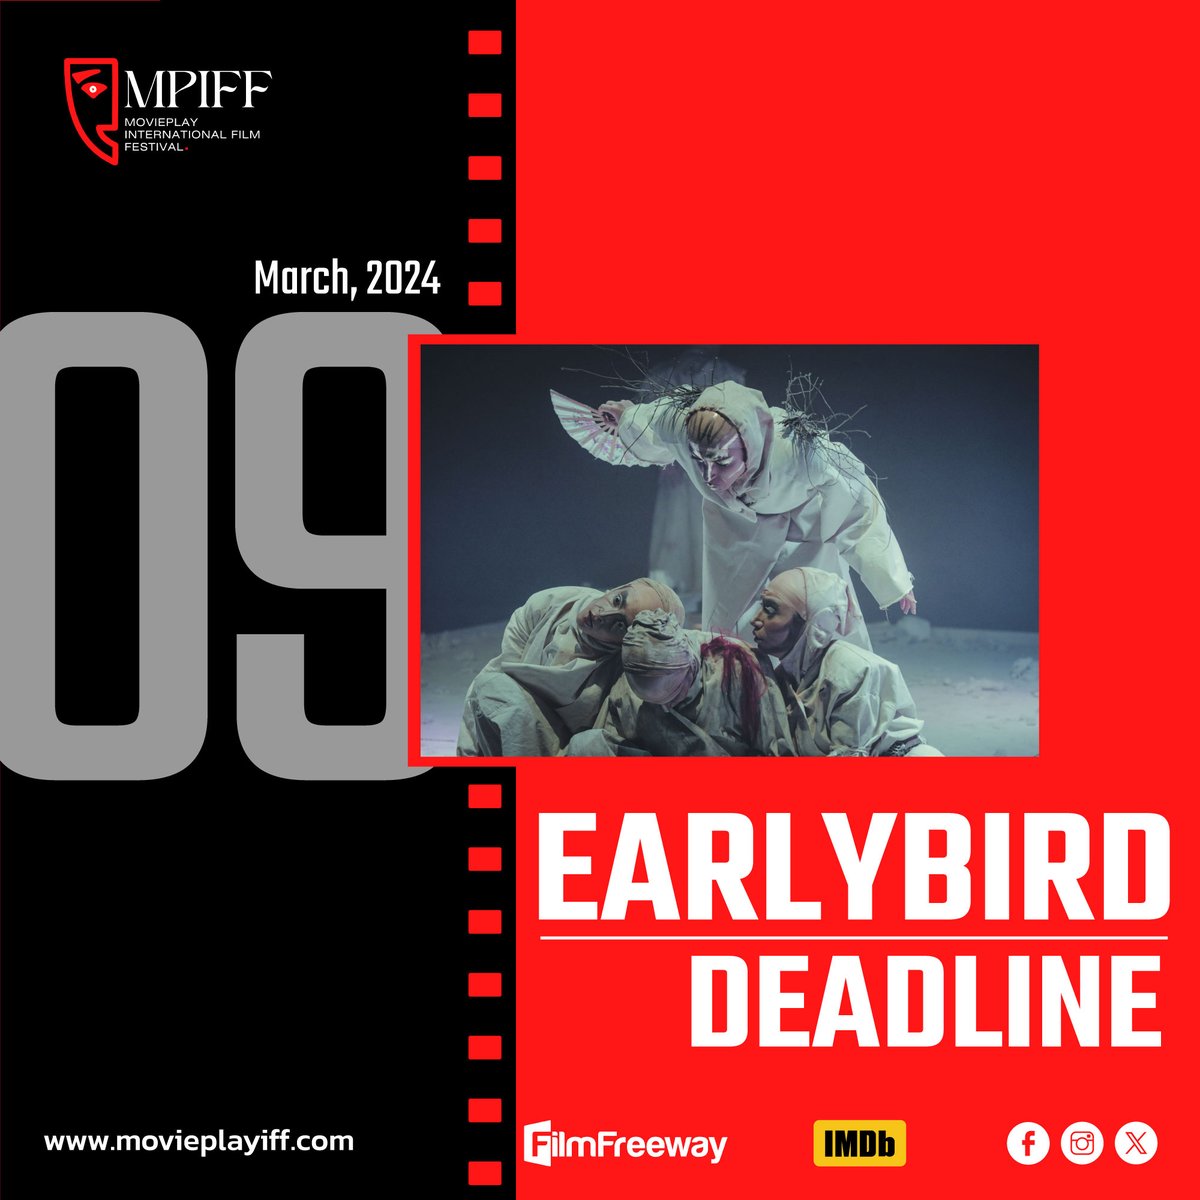 Earlybird Deadline Today!! 

Earlybird Deadline - 09 March, 2024 

Entries through FilmFreeway: filmfreeway.com/MoviePlayInter… 

#movieplay #deadline #earlybirddeadline #movieplayiff